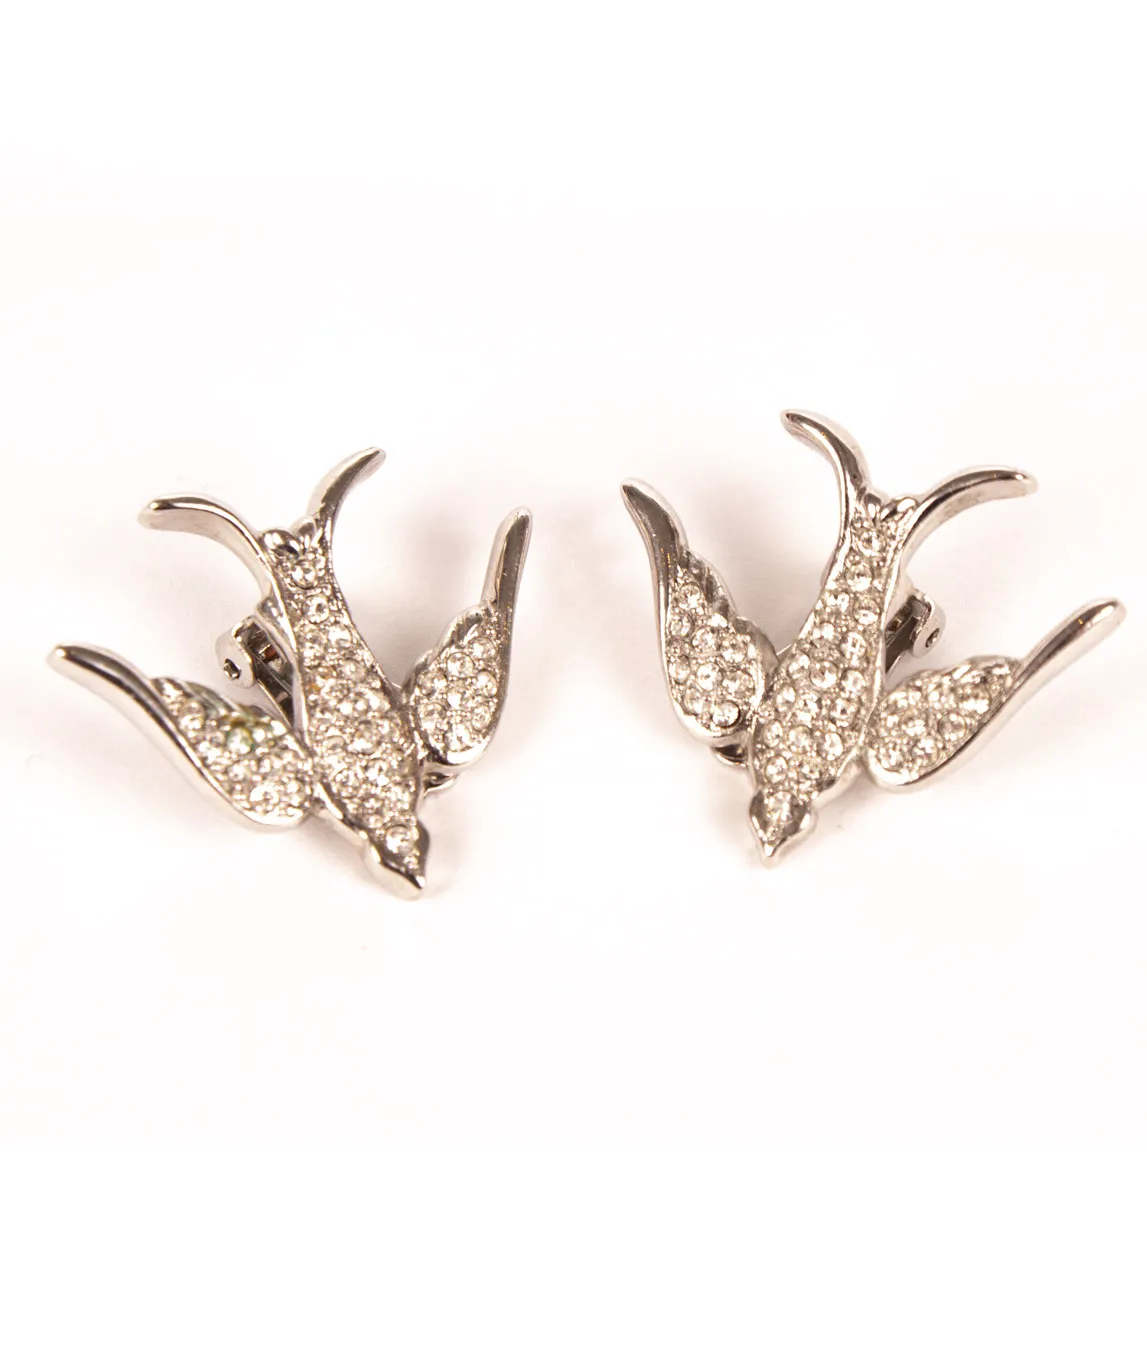 Christian Dior bird earrings